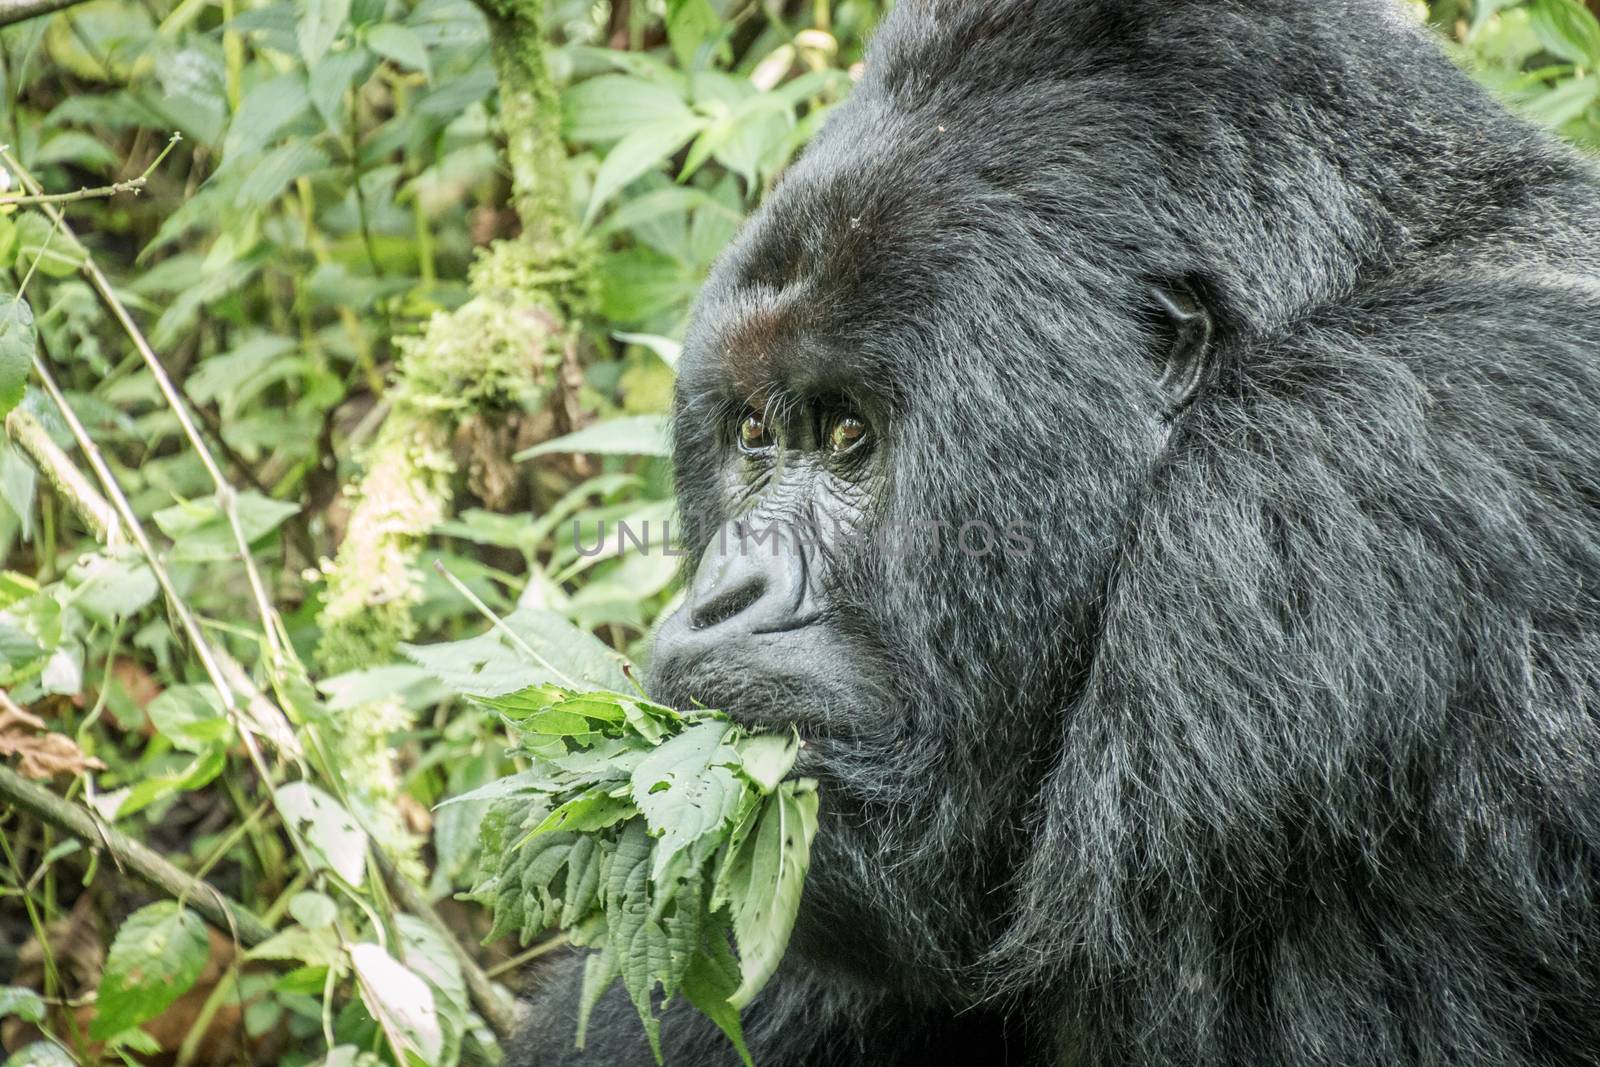 Silverback Mountain gorilla eating leaves in the Virunga National Park, Democratic Republic Of Congo.